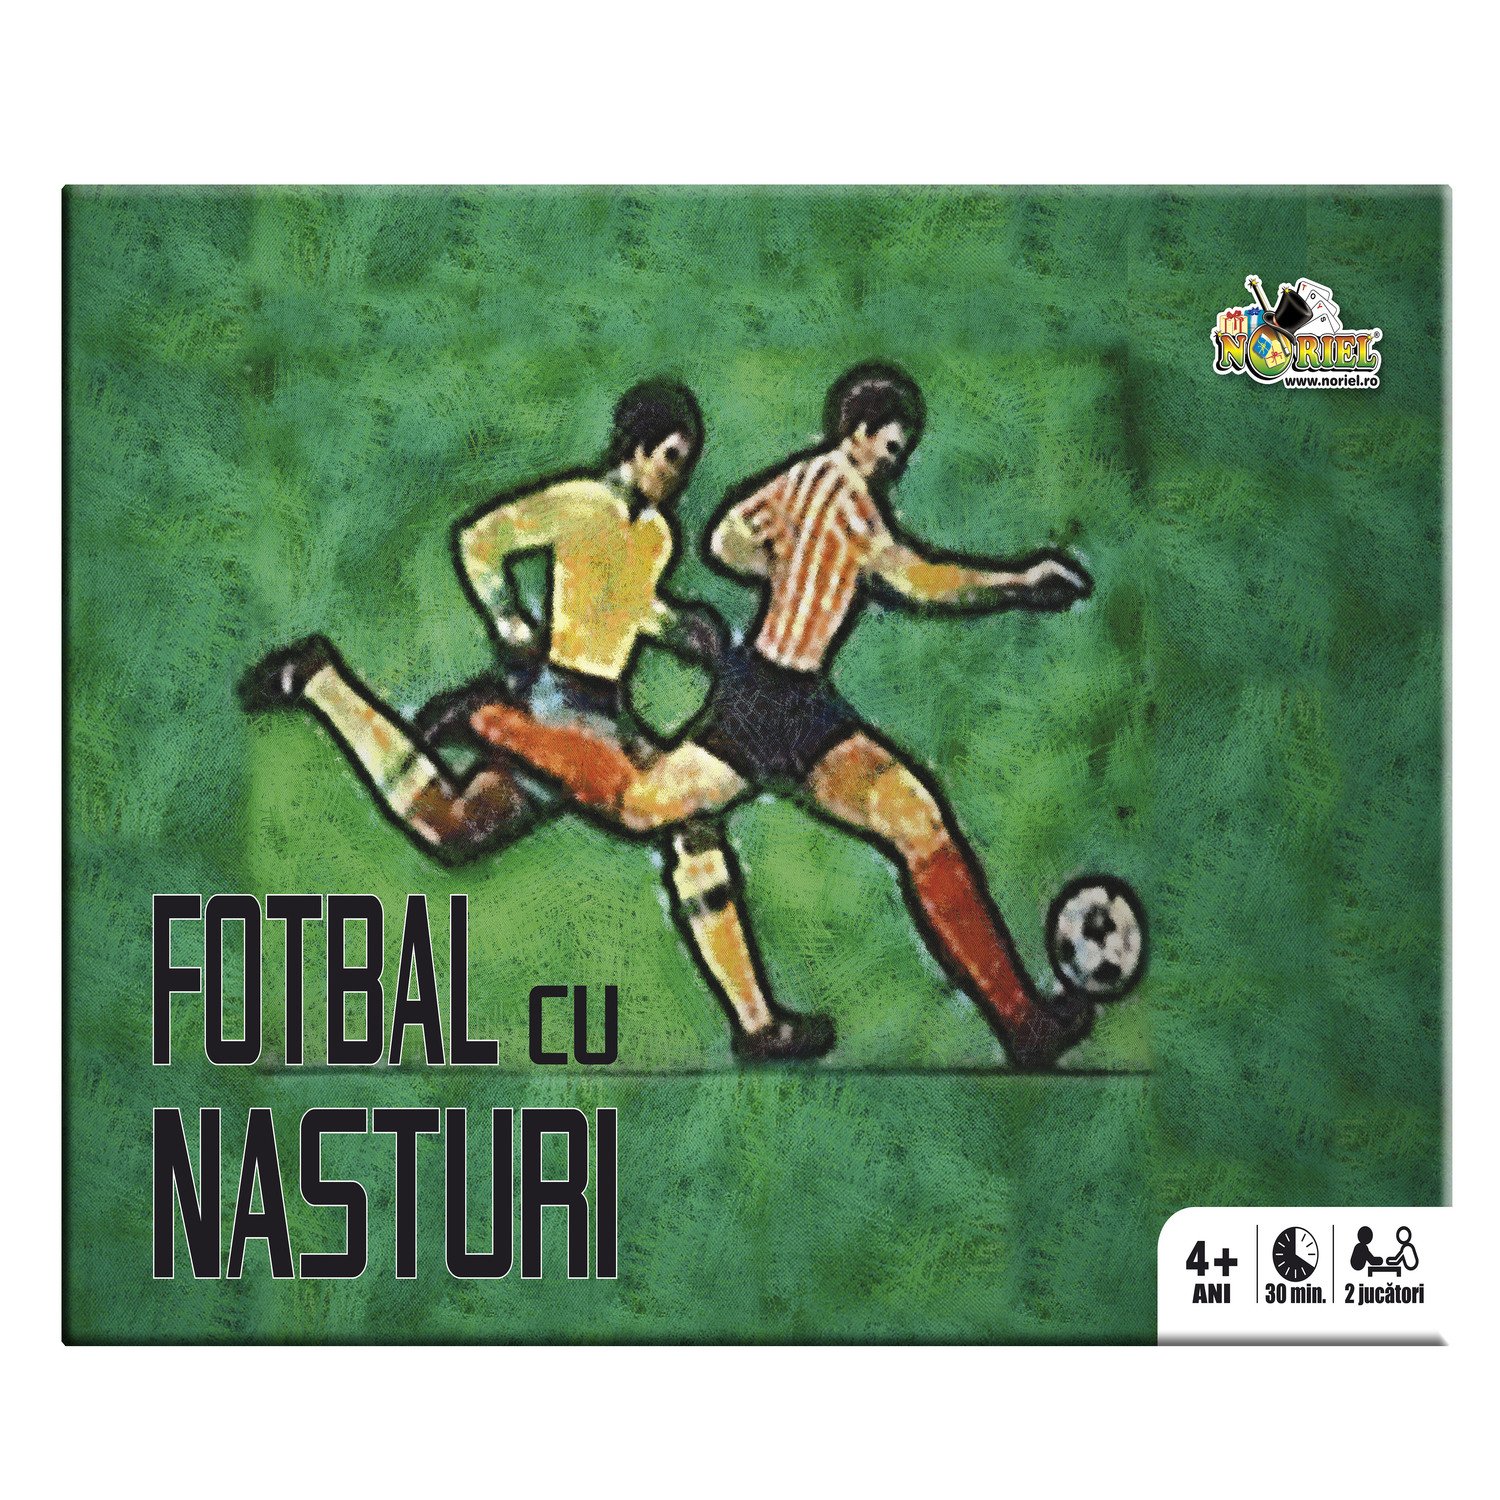 Joc Noriel – Fotbal cu nasturi Jocuri interactive 2023-09-21